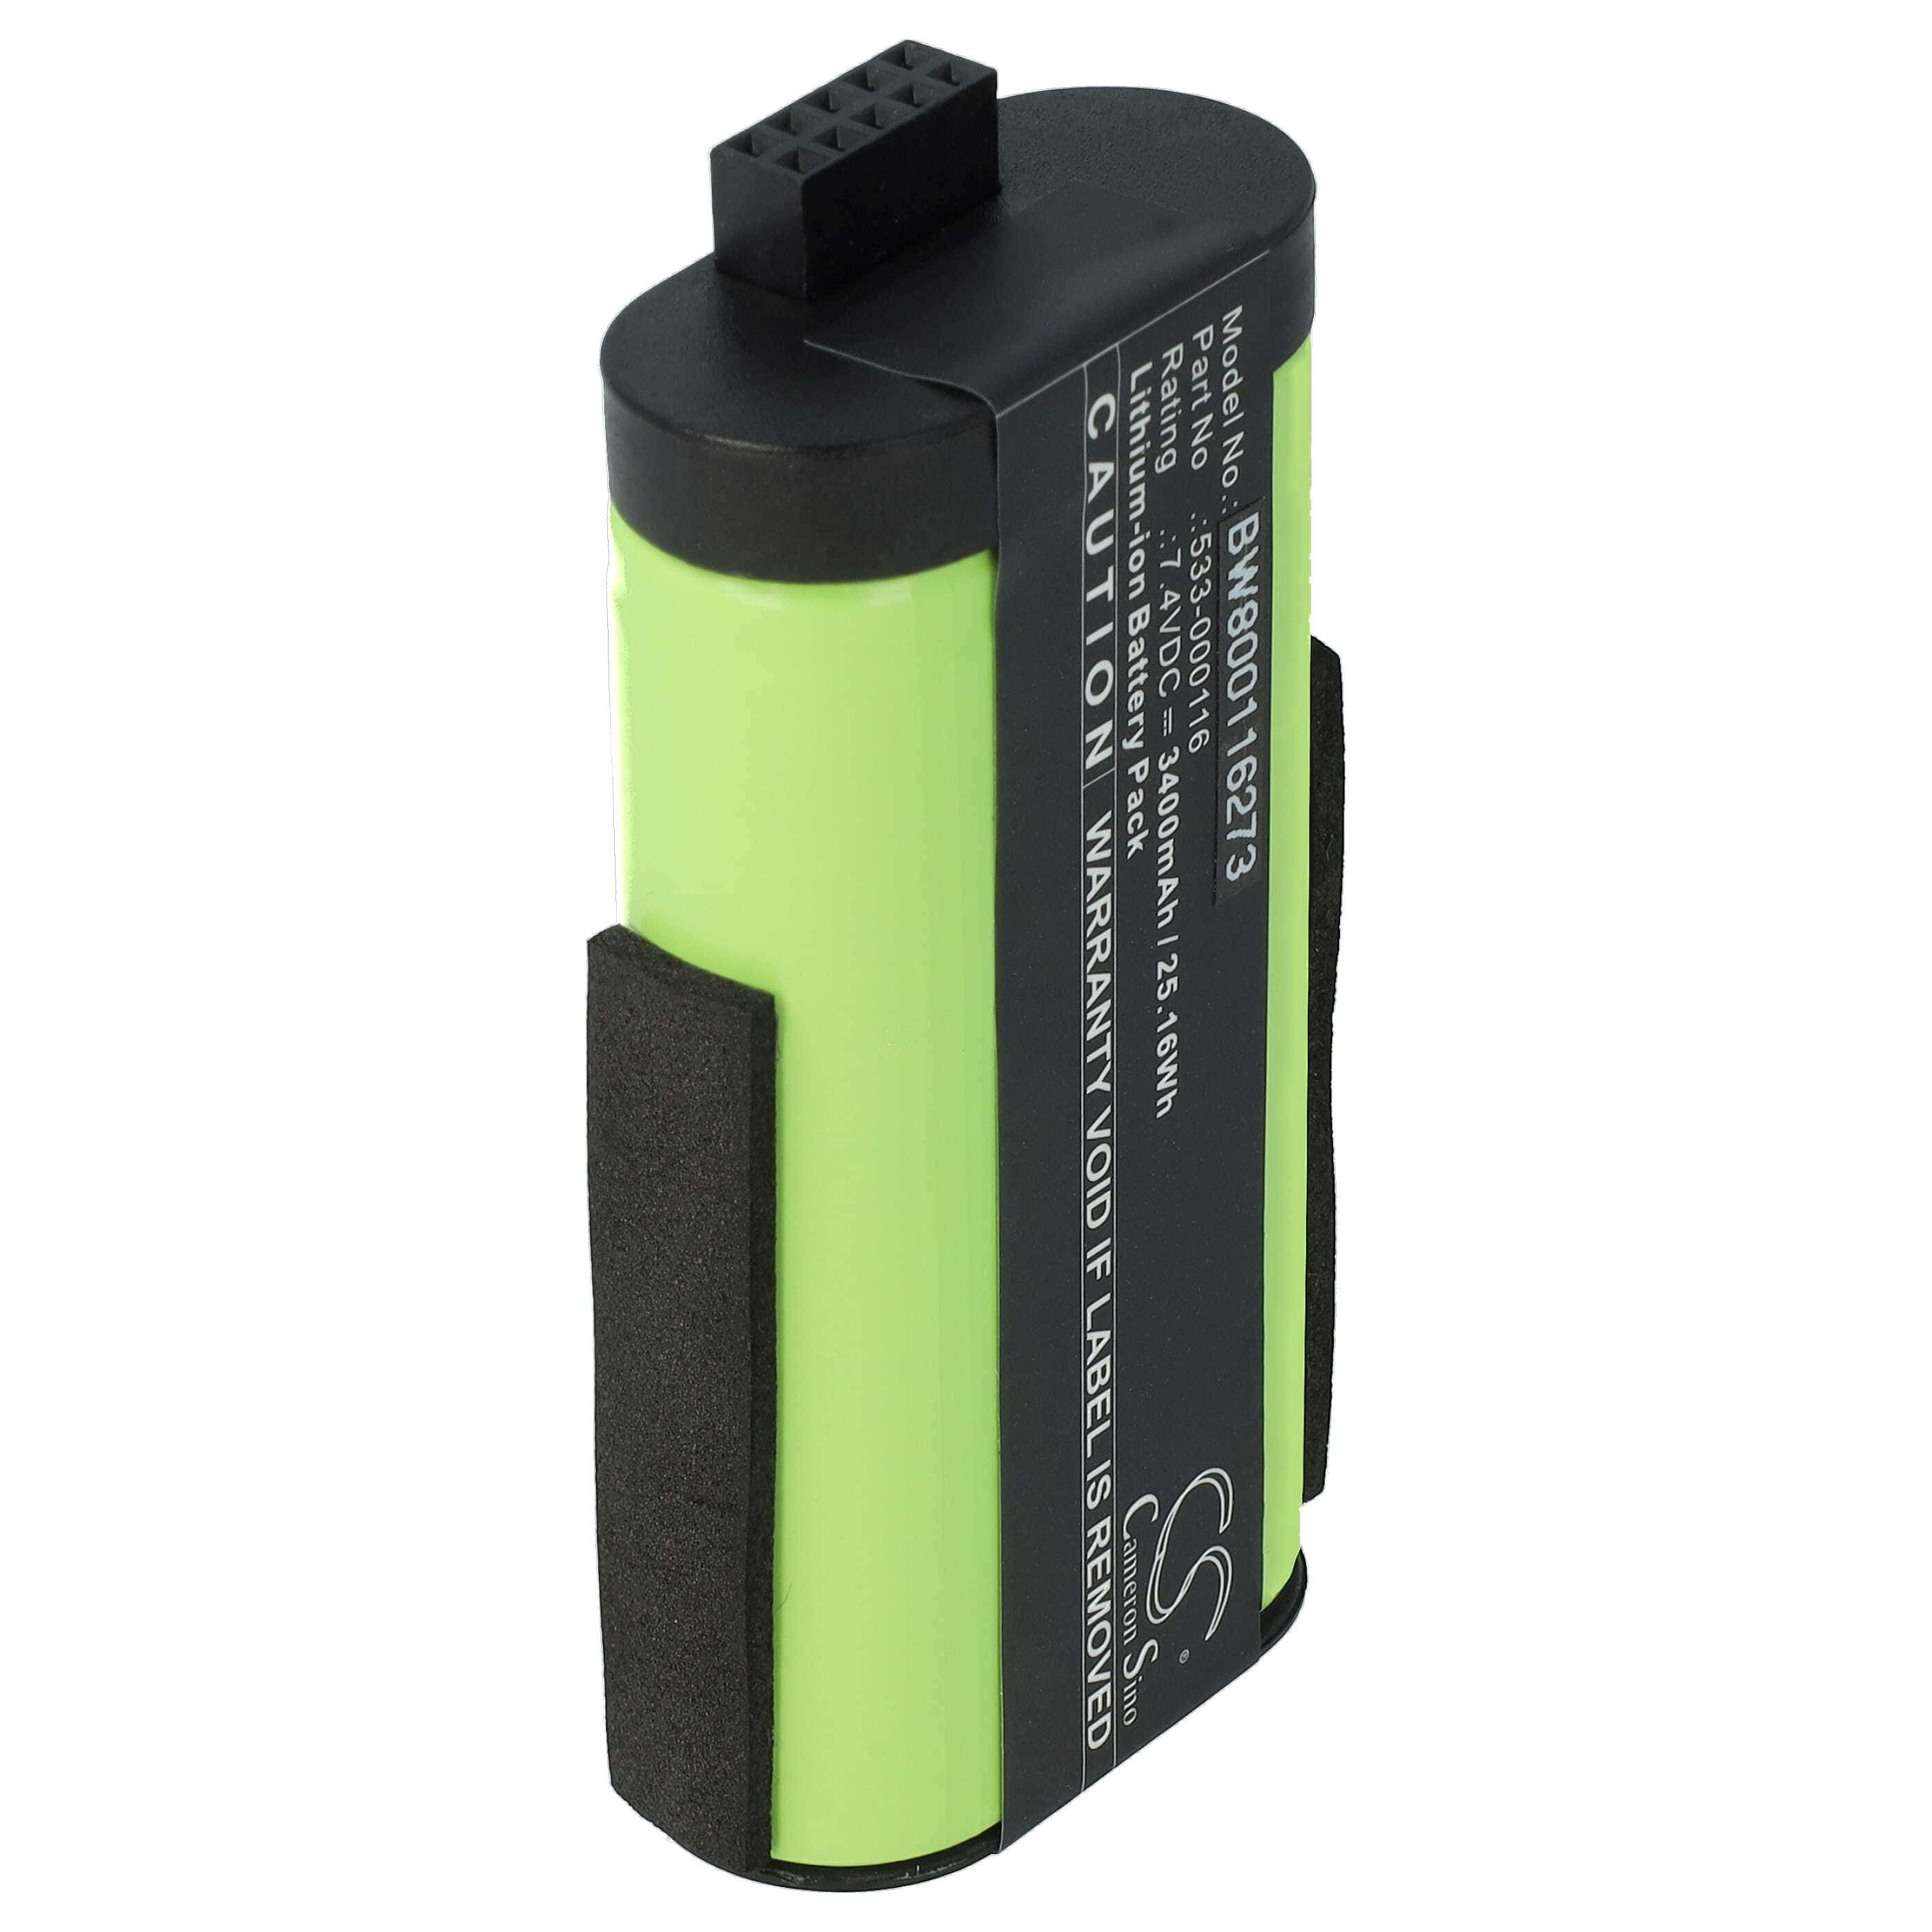 Batería reemplaza Logitech 533-000116, 533-000138 para altavoces Logitech - 3400 mAh 7,4 V Li-Ion